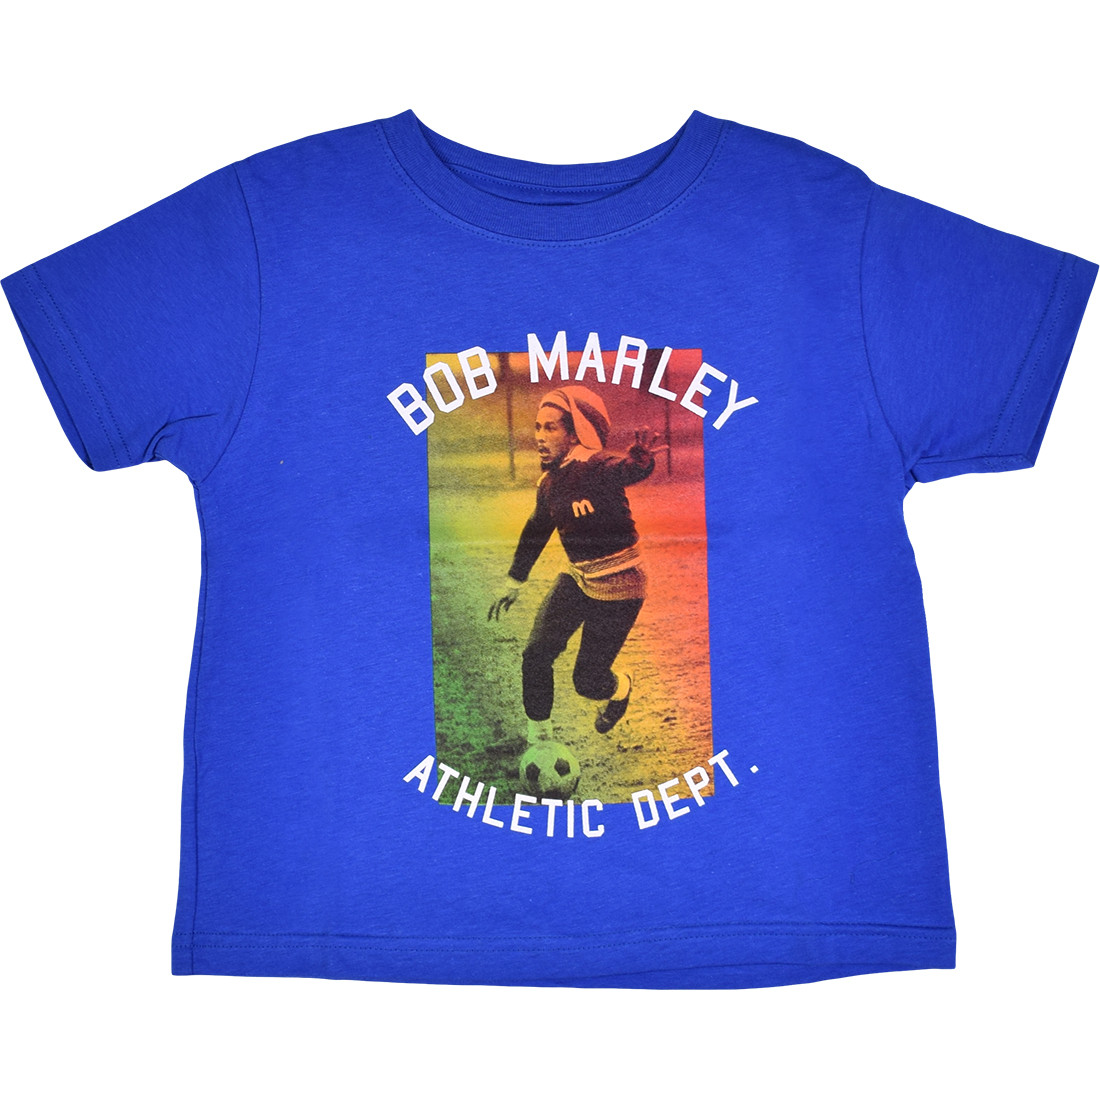 Bob Marley Athletic Dept. Toddler Blue T-Shirt Tee Liquid Blue